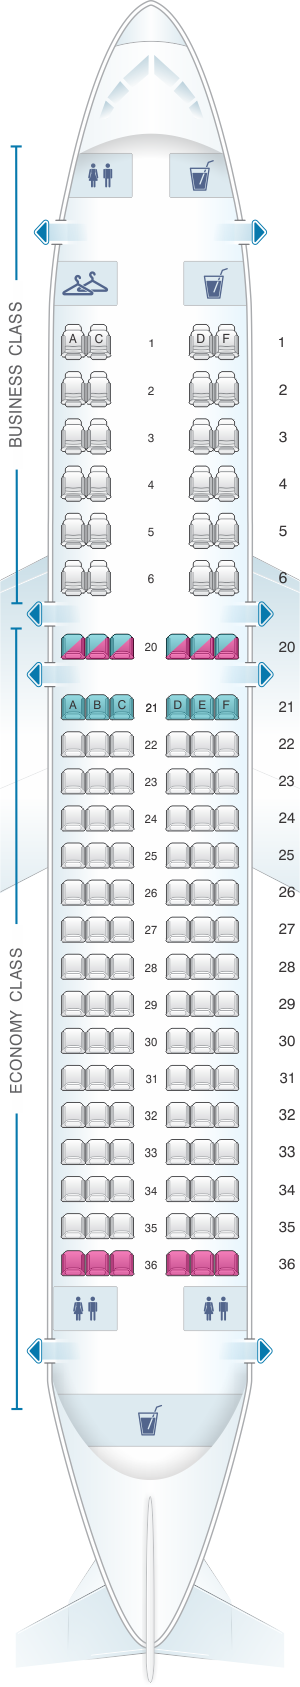 Plan De Cabine Mea Airbus A320 200 Seatmaestrofr